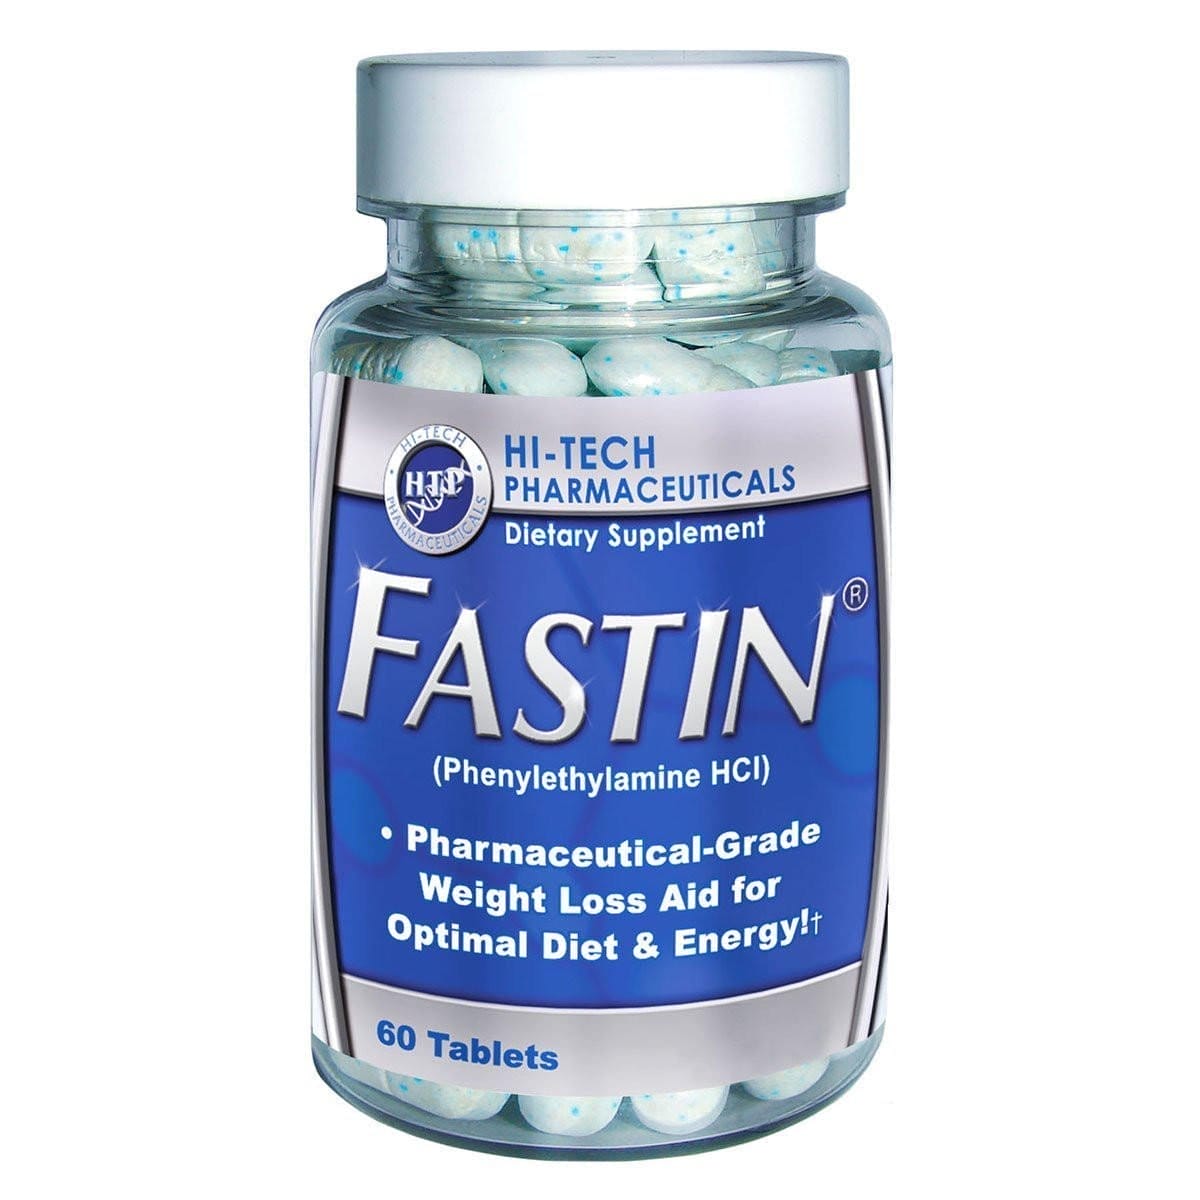 Image of Hi-Tech Pharmaceuticals Fastin Fat Burner Pills